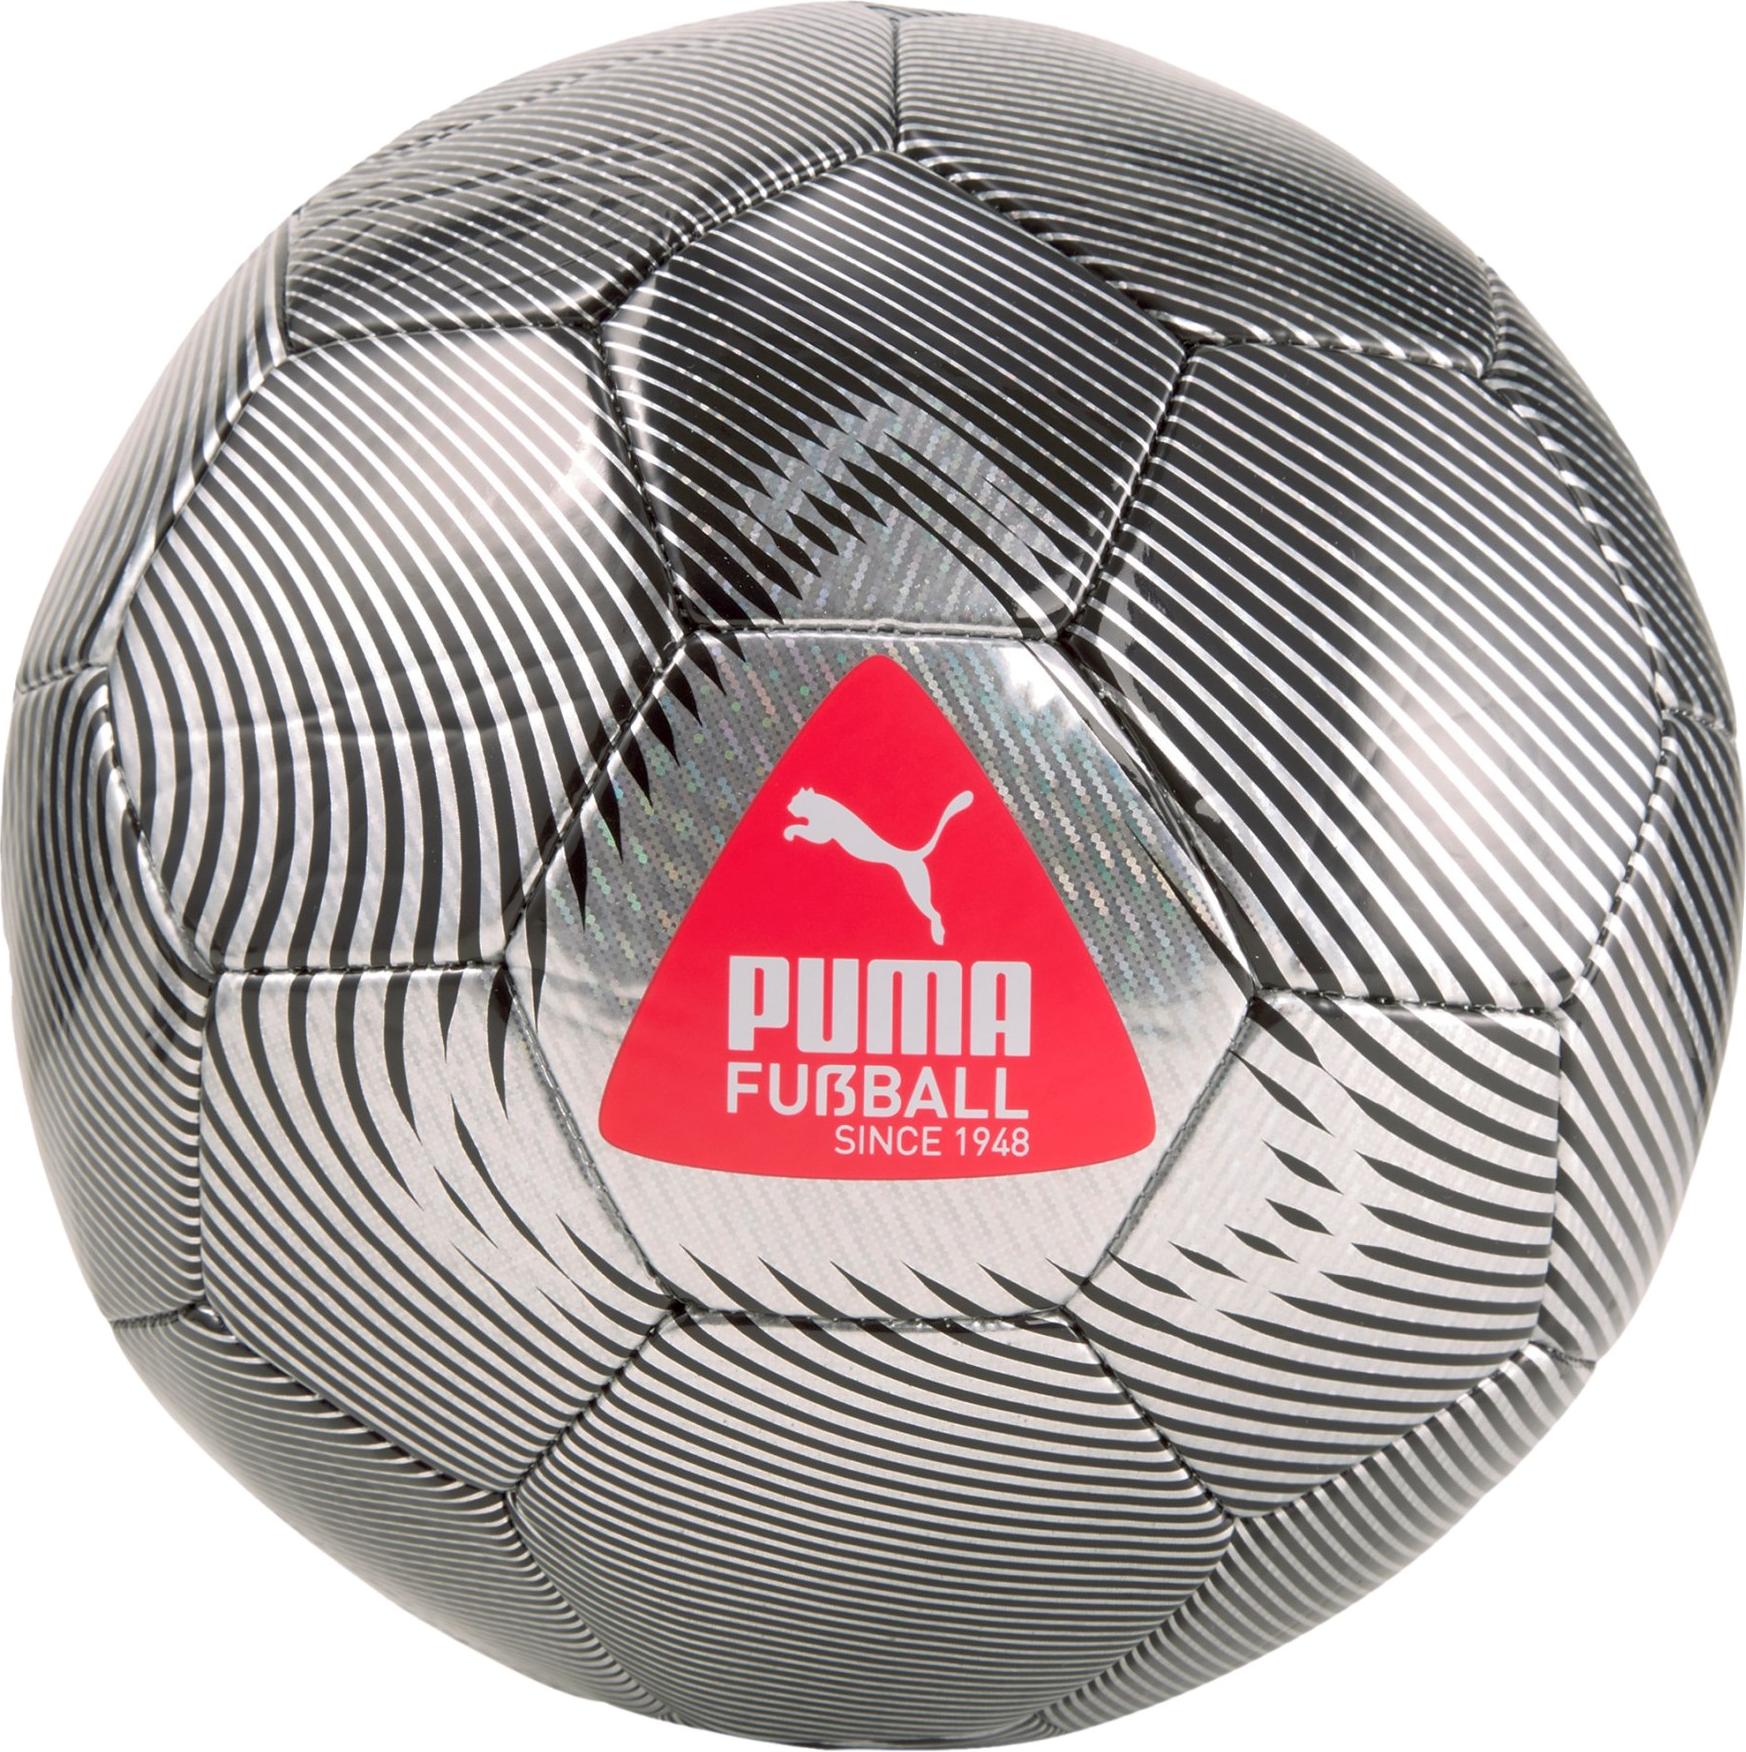 Ball Puma CAGE ball